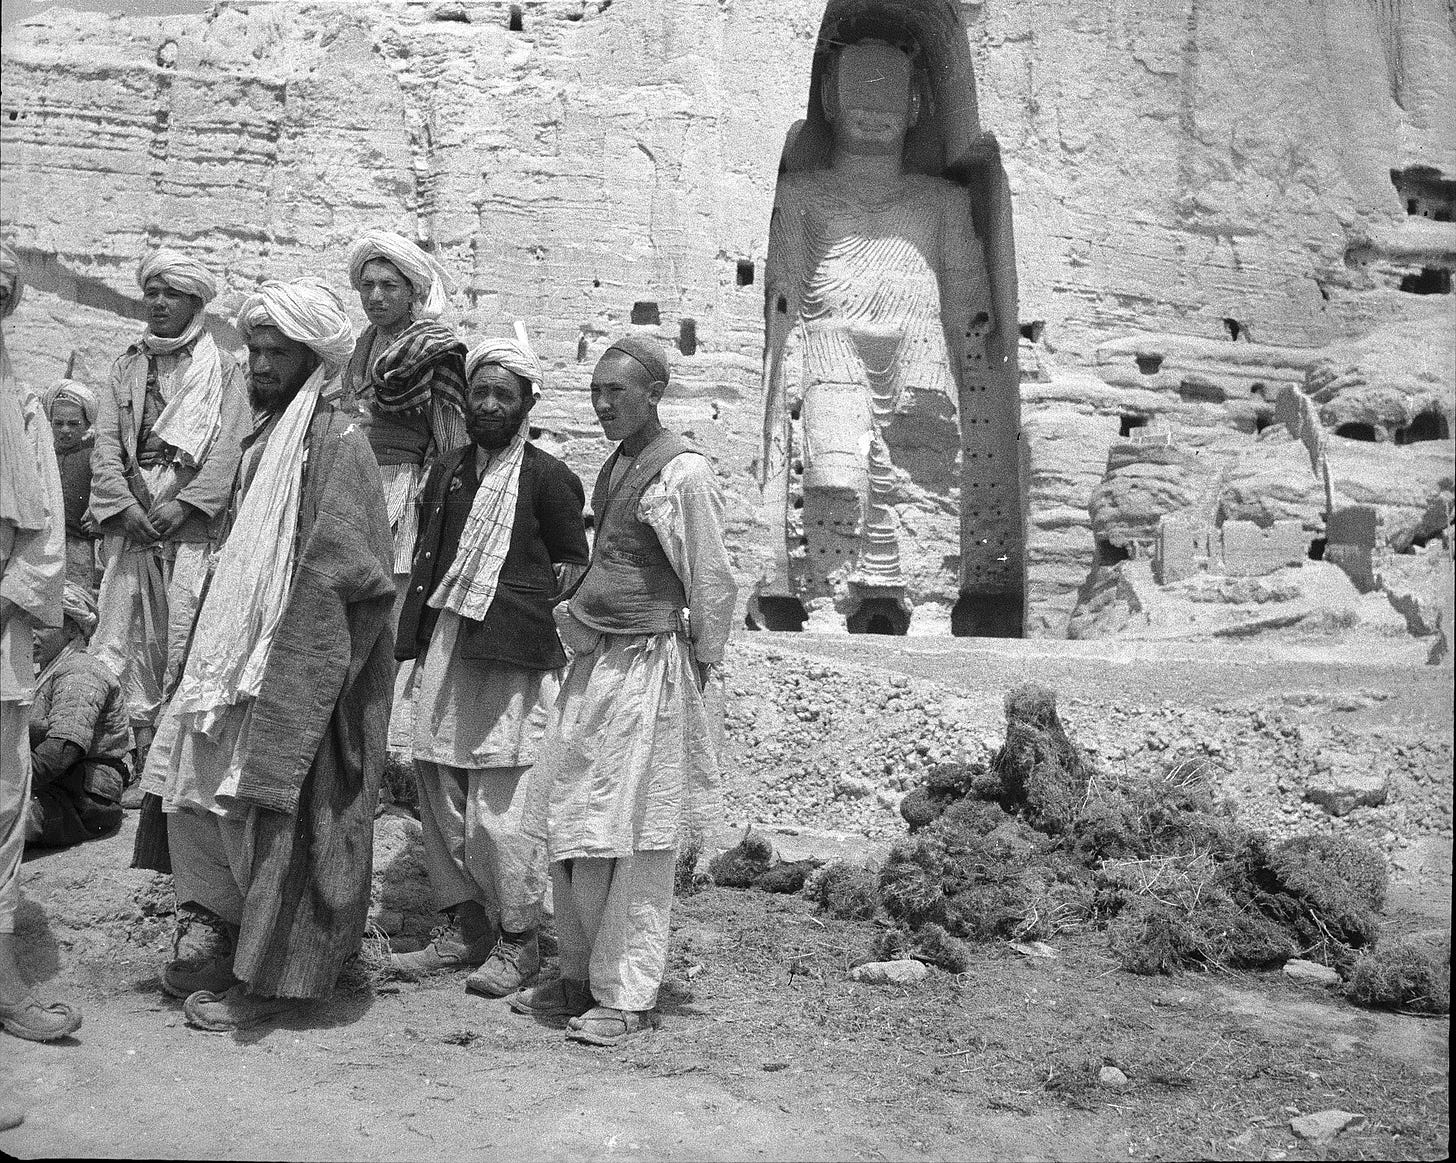 Local men standing near the larger "Salsal" Buddha statue, c. 1940